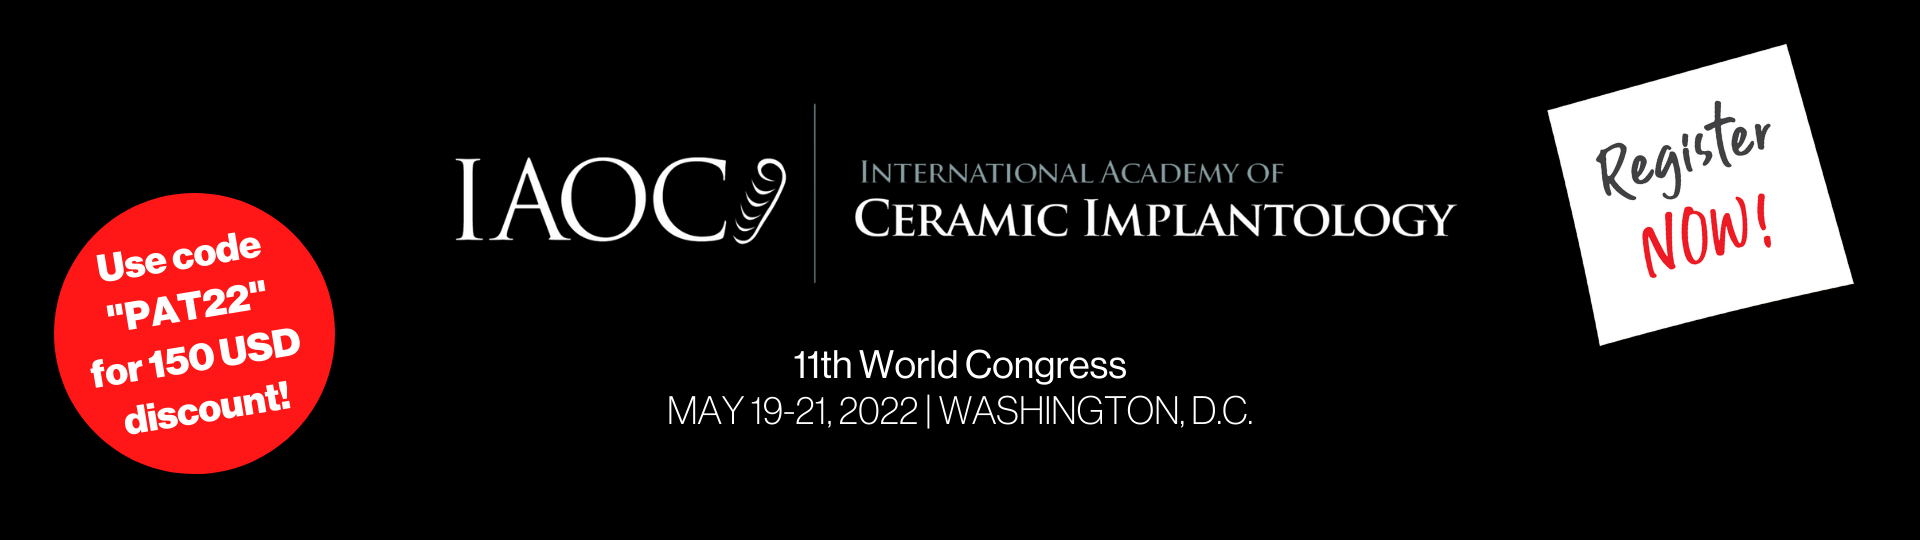 International Academy of Ceramic Implantology - 11th World Congress in Washington